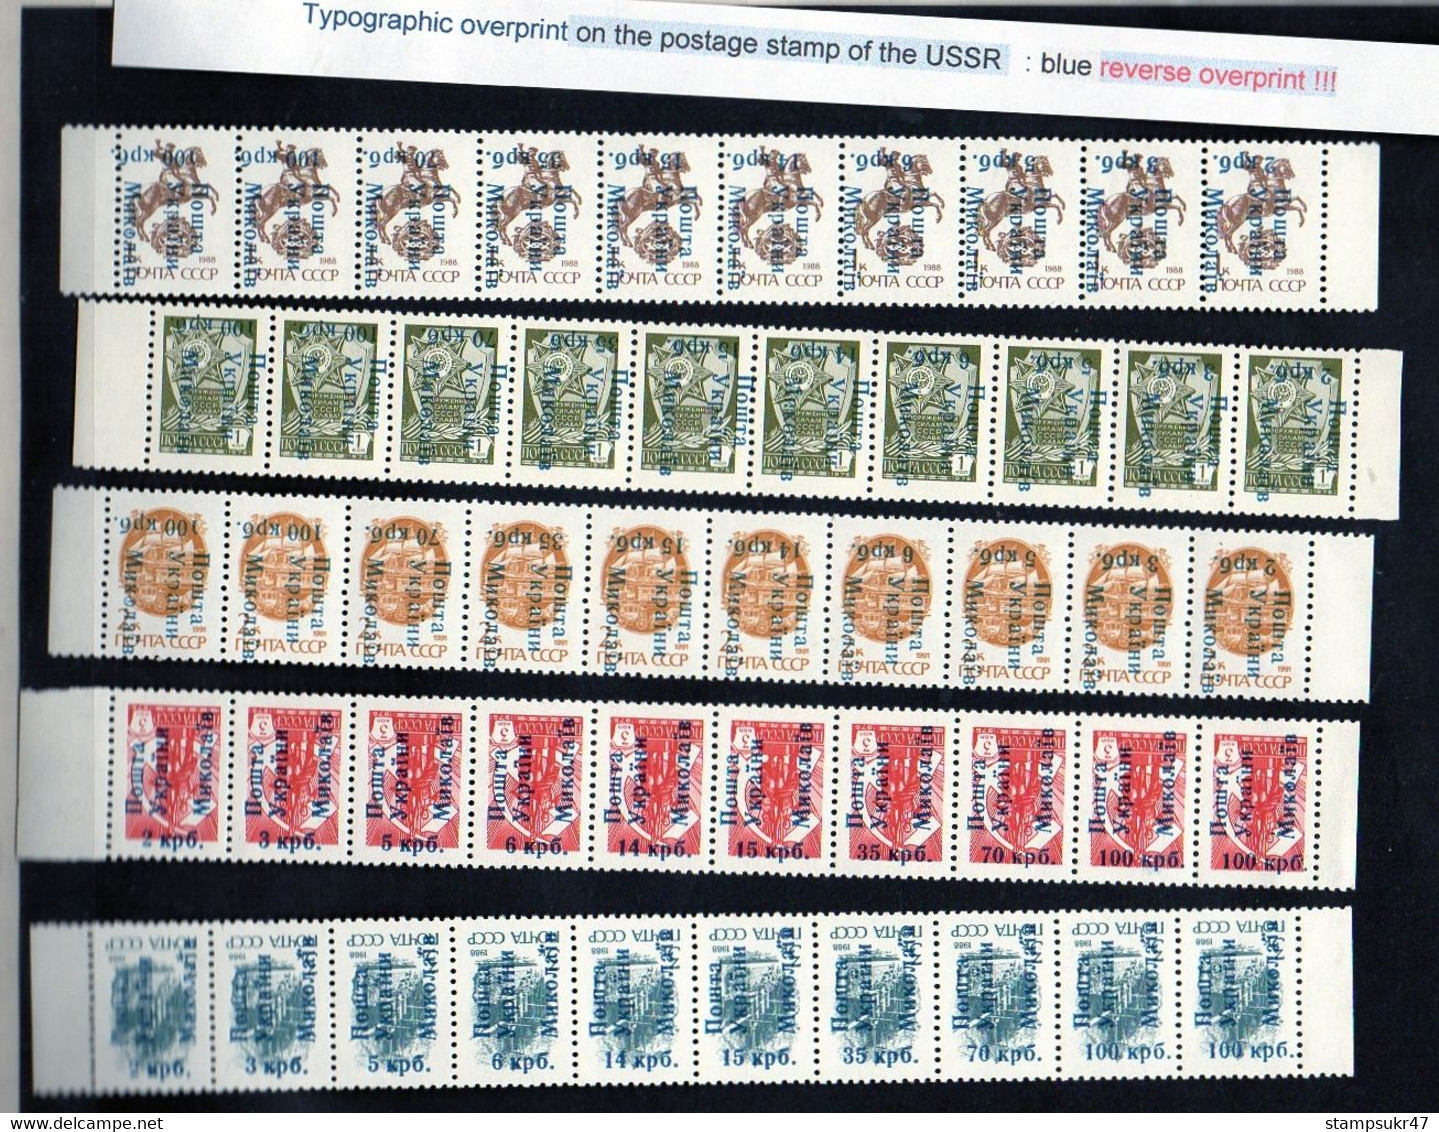 Ukraine 1993 Mykolaiv -7 Nikolaev Local \ provisional Set of 18 strips of 10 stamps / overprints direct and reverse / **